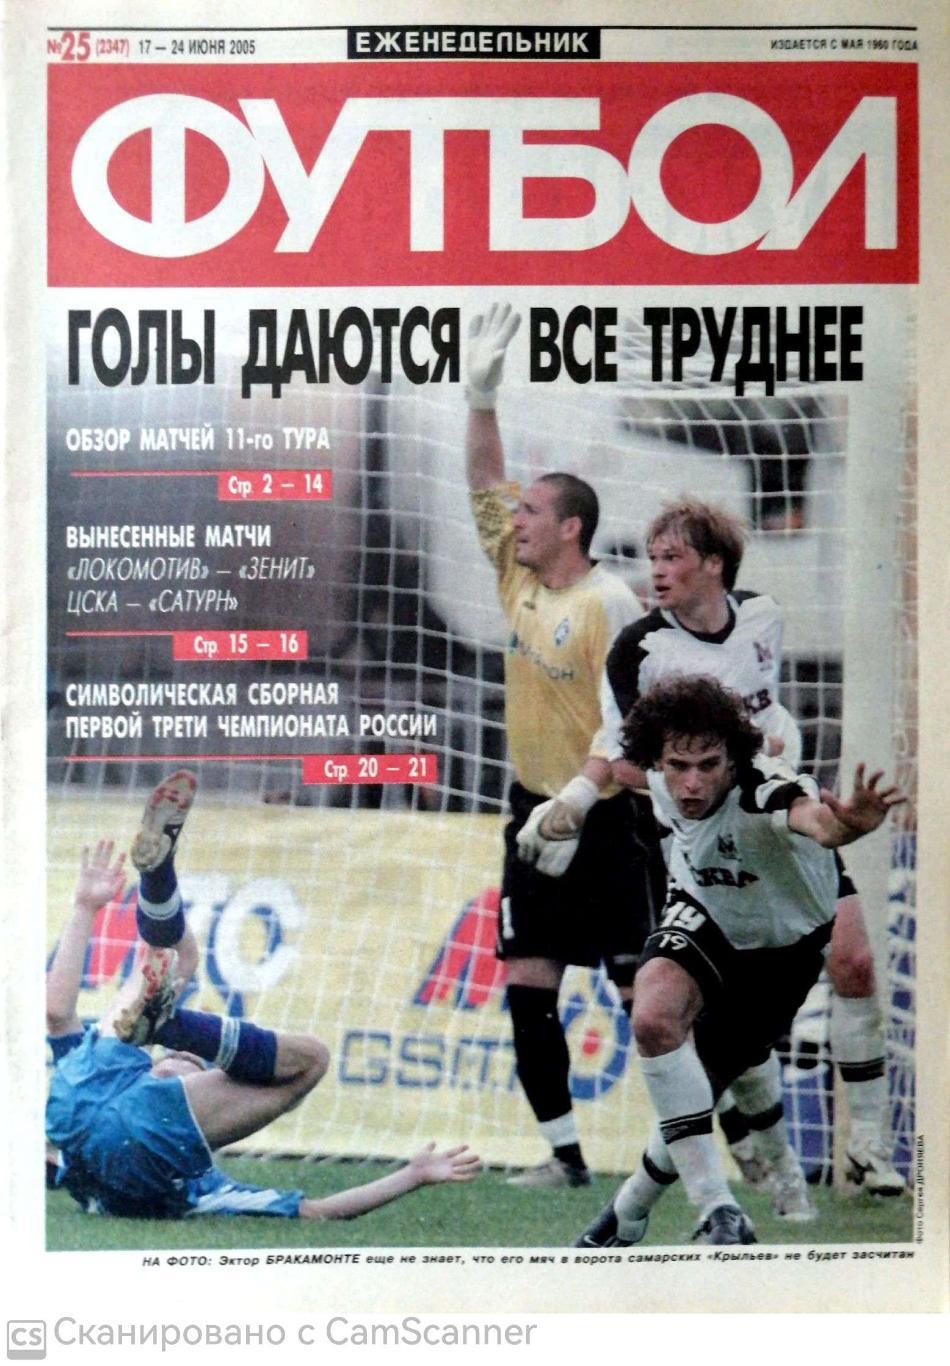 Еженедельник «Футбол» (Москва). 2005 год. №25